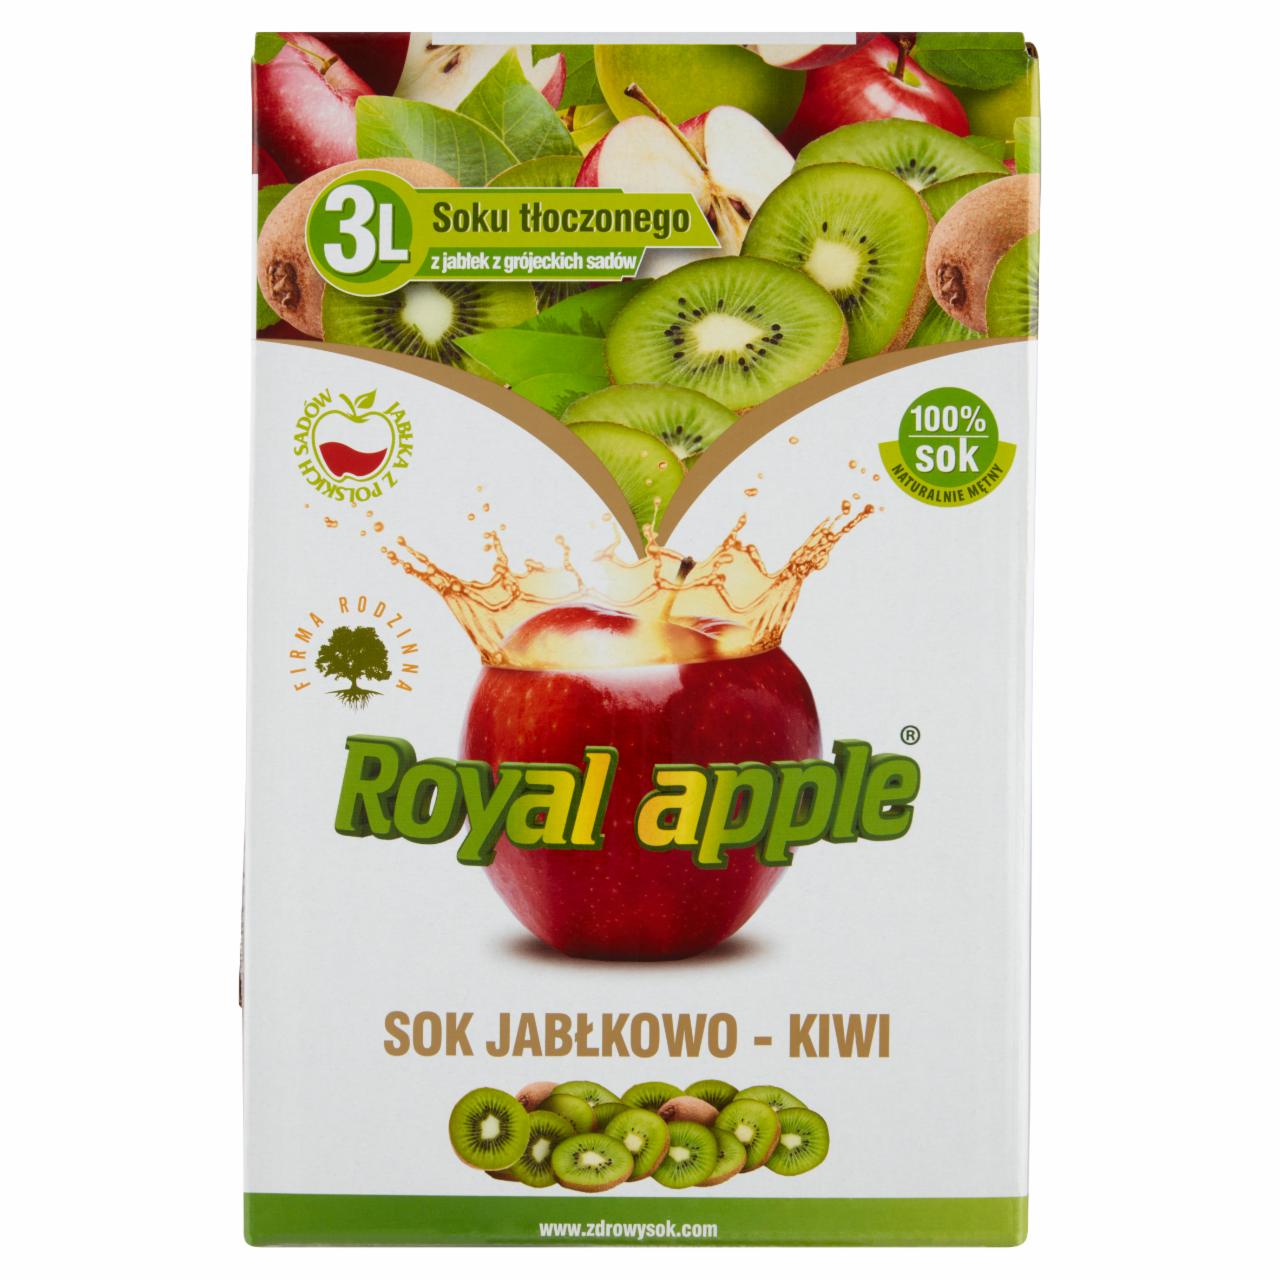 Zdjęcia - Sok jabłkowo-kiwi Royal apple